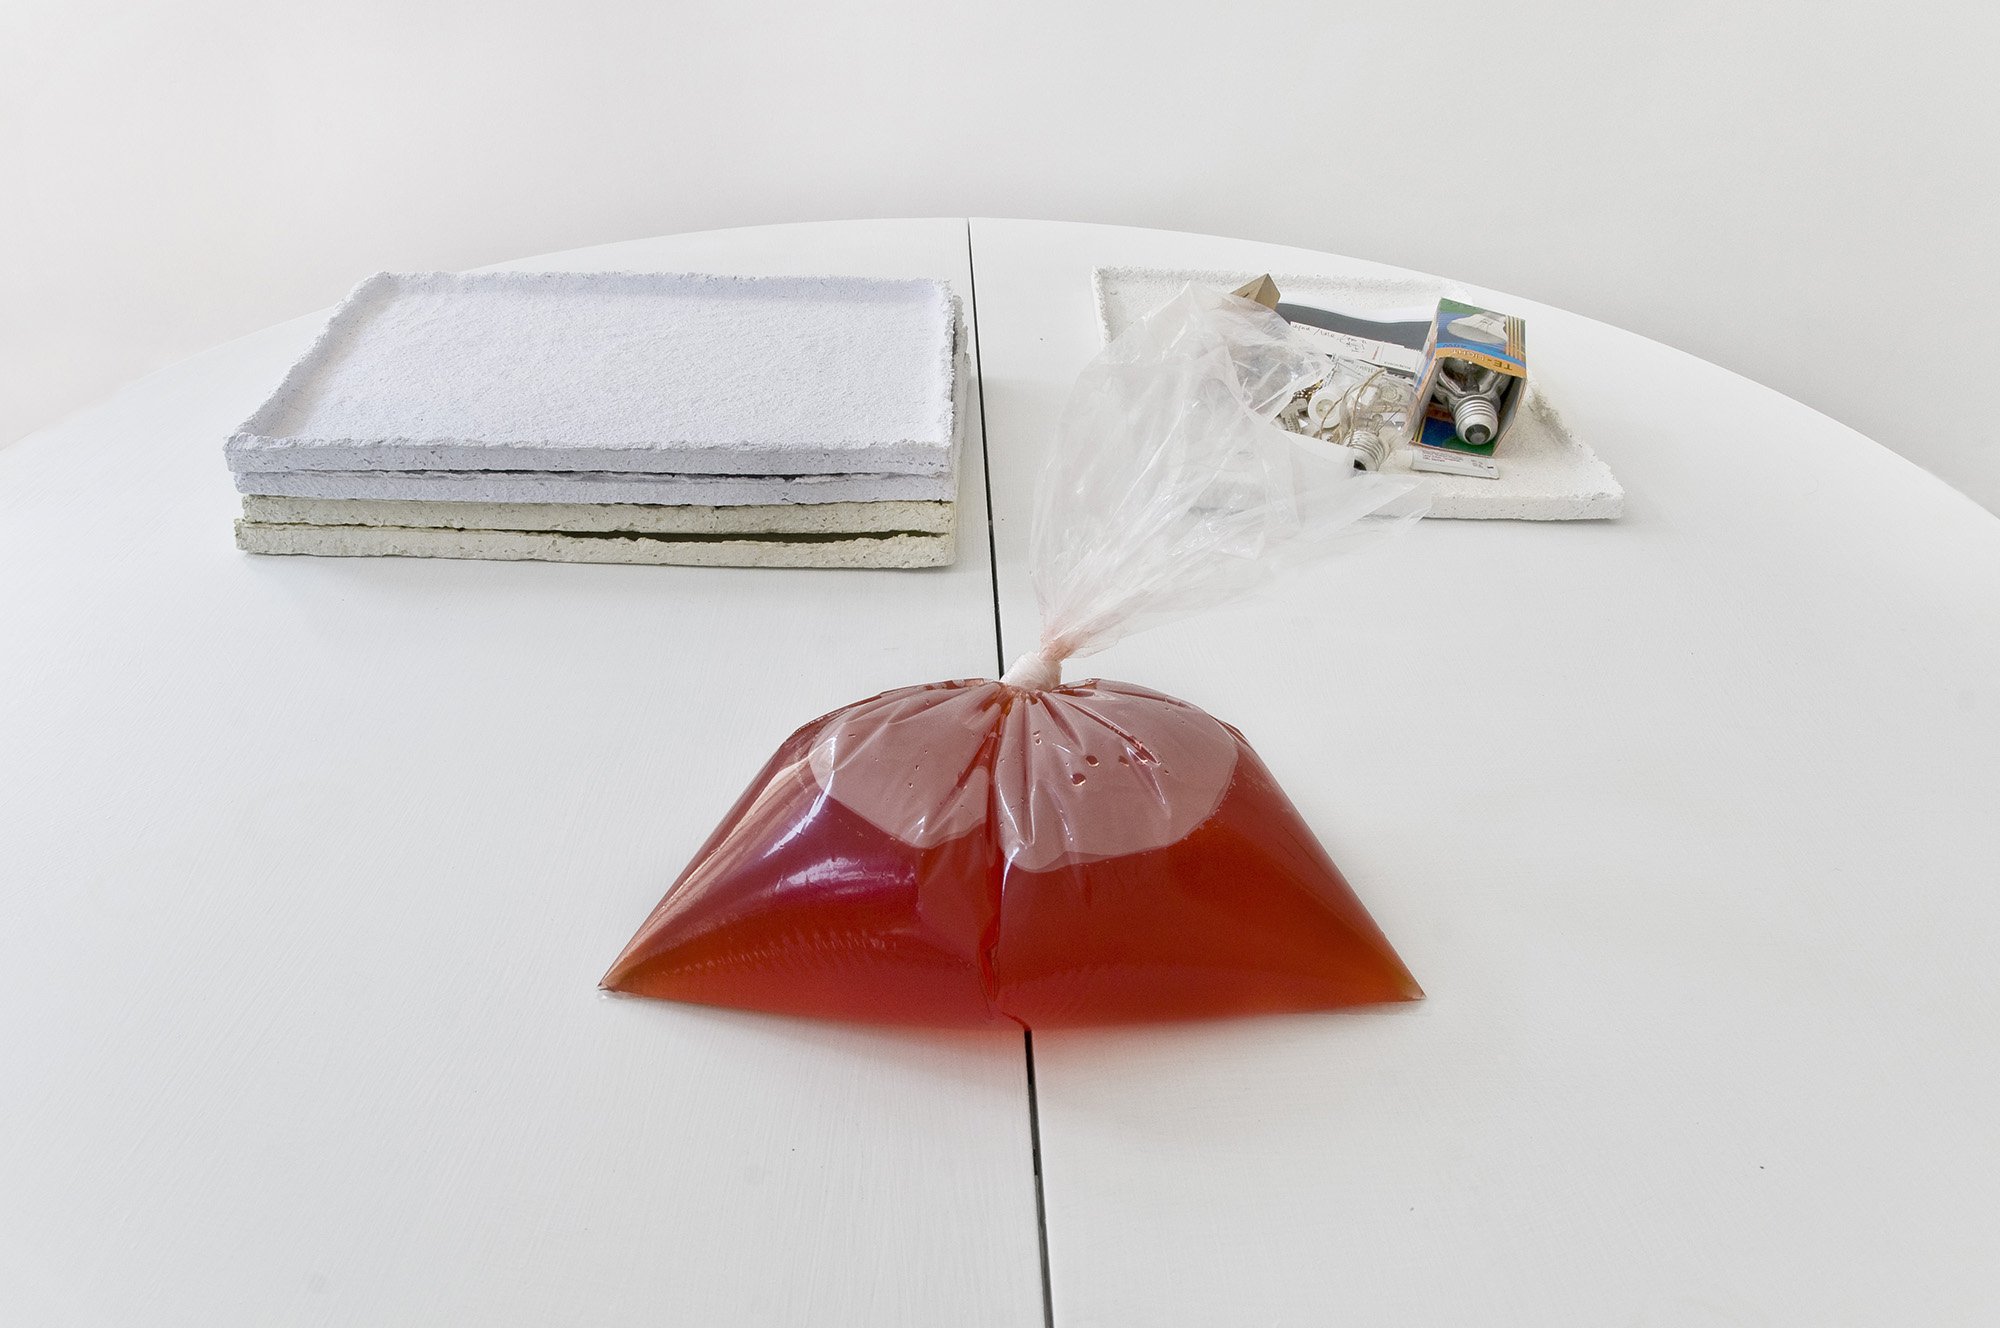 Ian Law, run off, residual water, paper dye, baking powder, adhesive in plastic bag, 2012